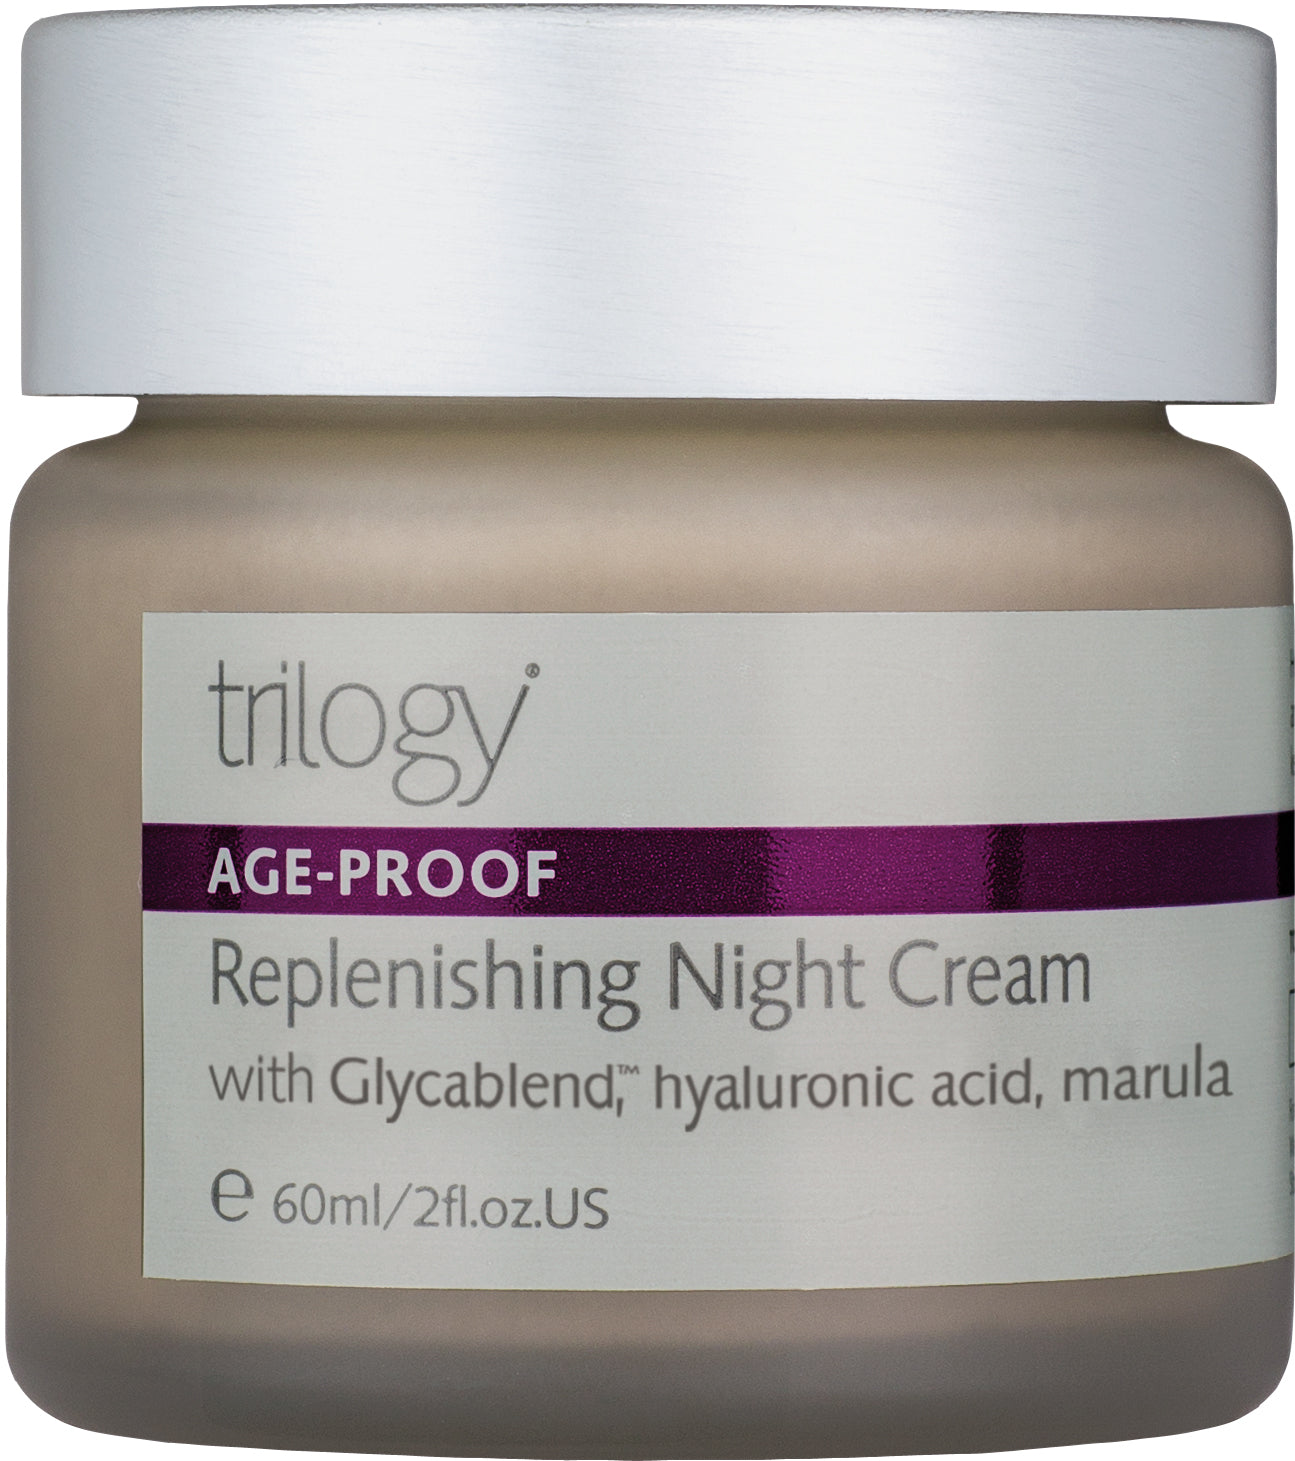 Trilogy replenishing night cream 60ml, Leahys pharmacy